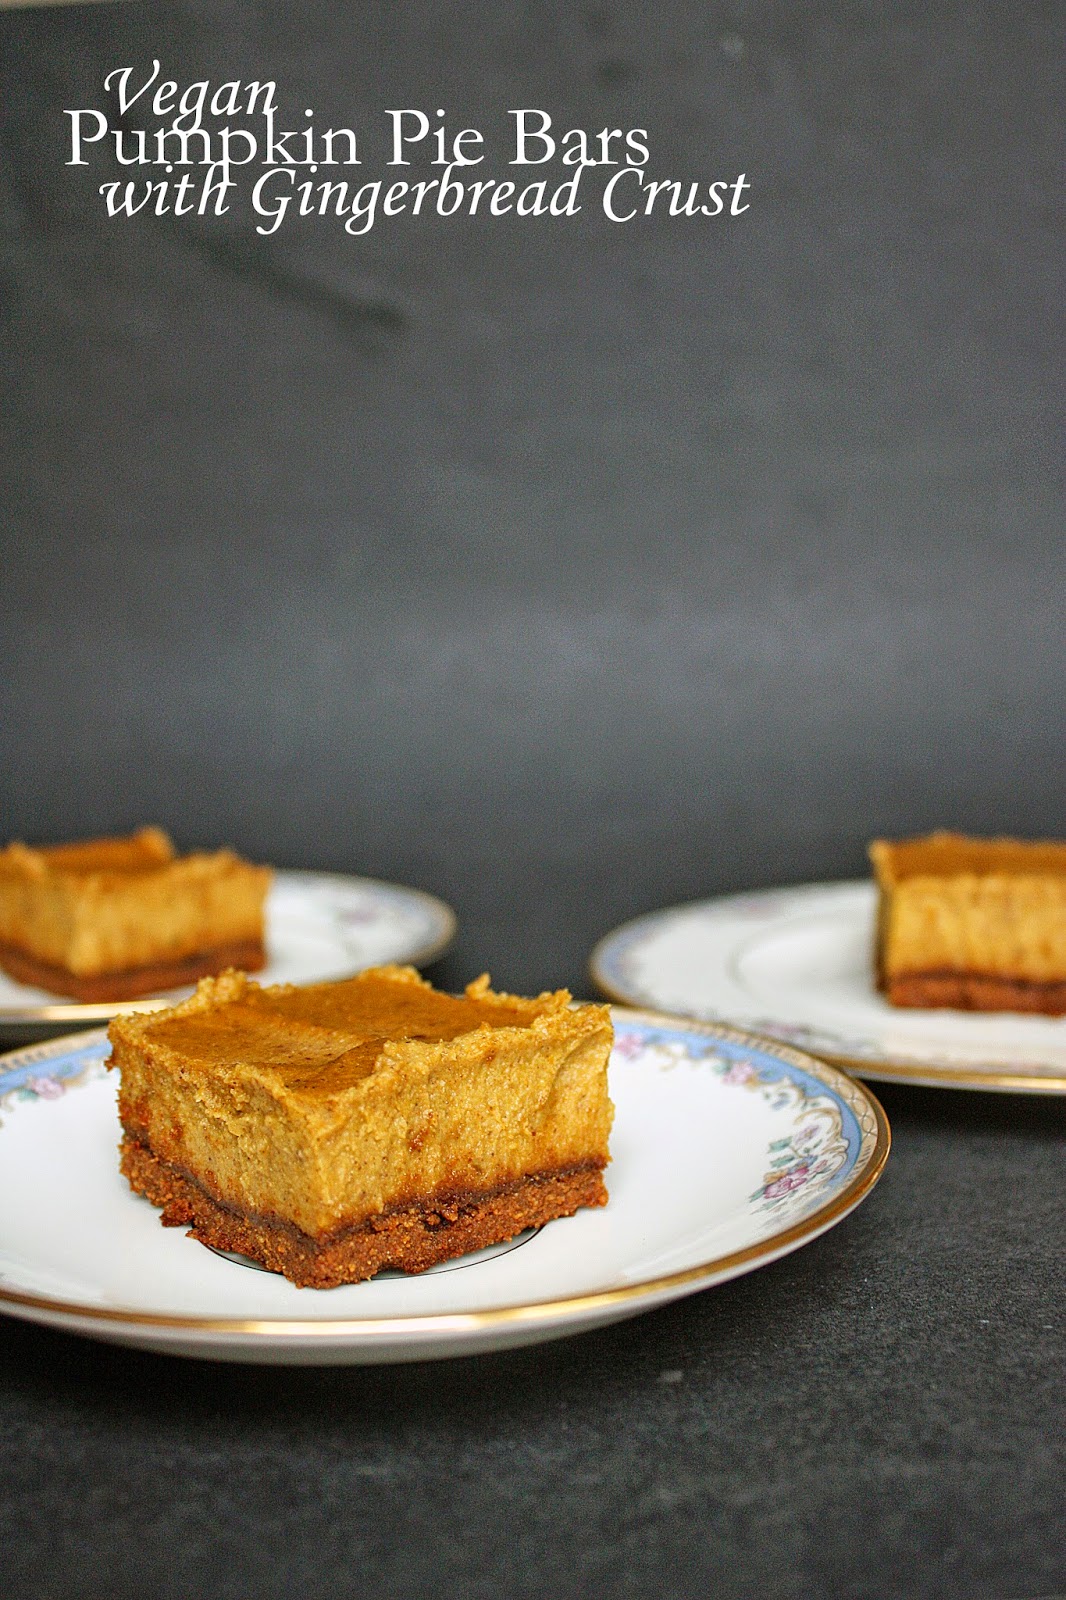 Gluten-free pumpkin pie cheesecake bars with gingerbread crust